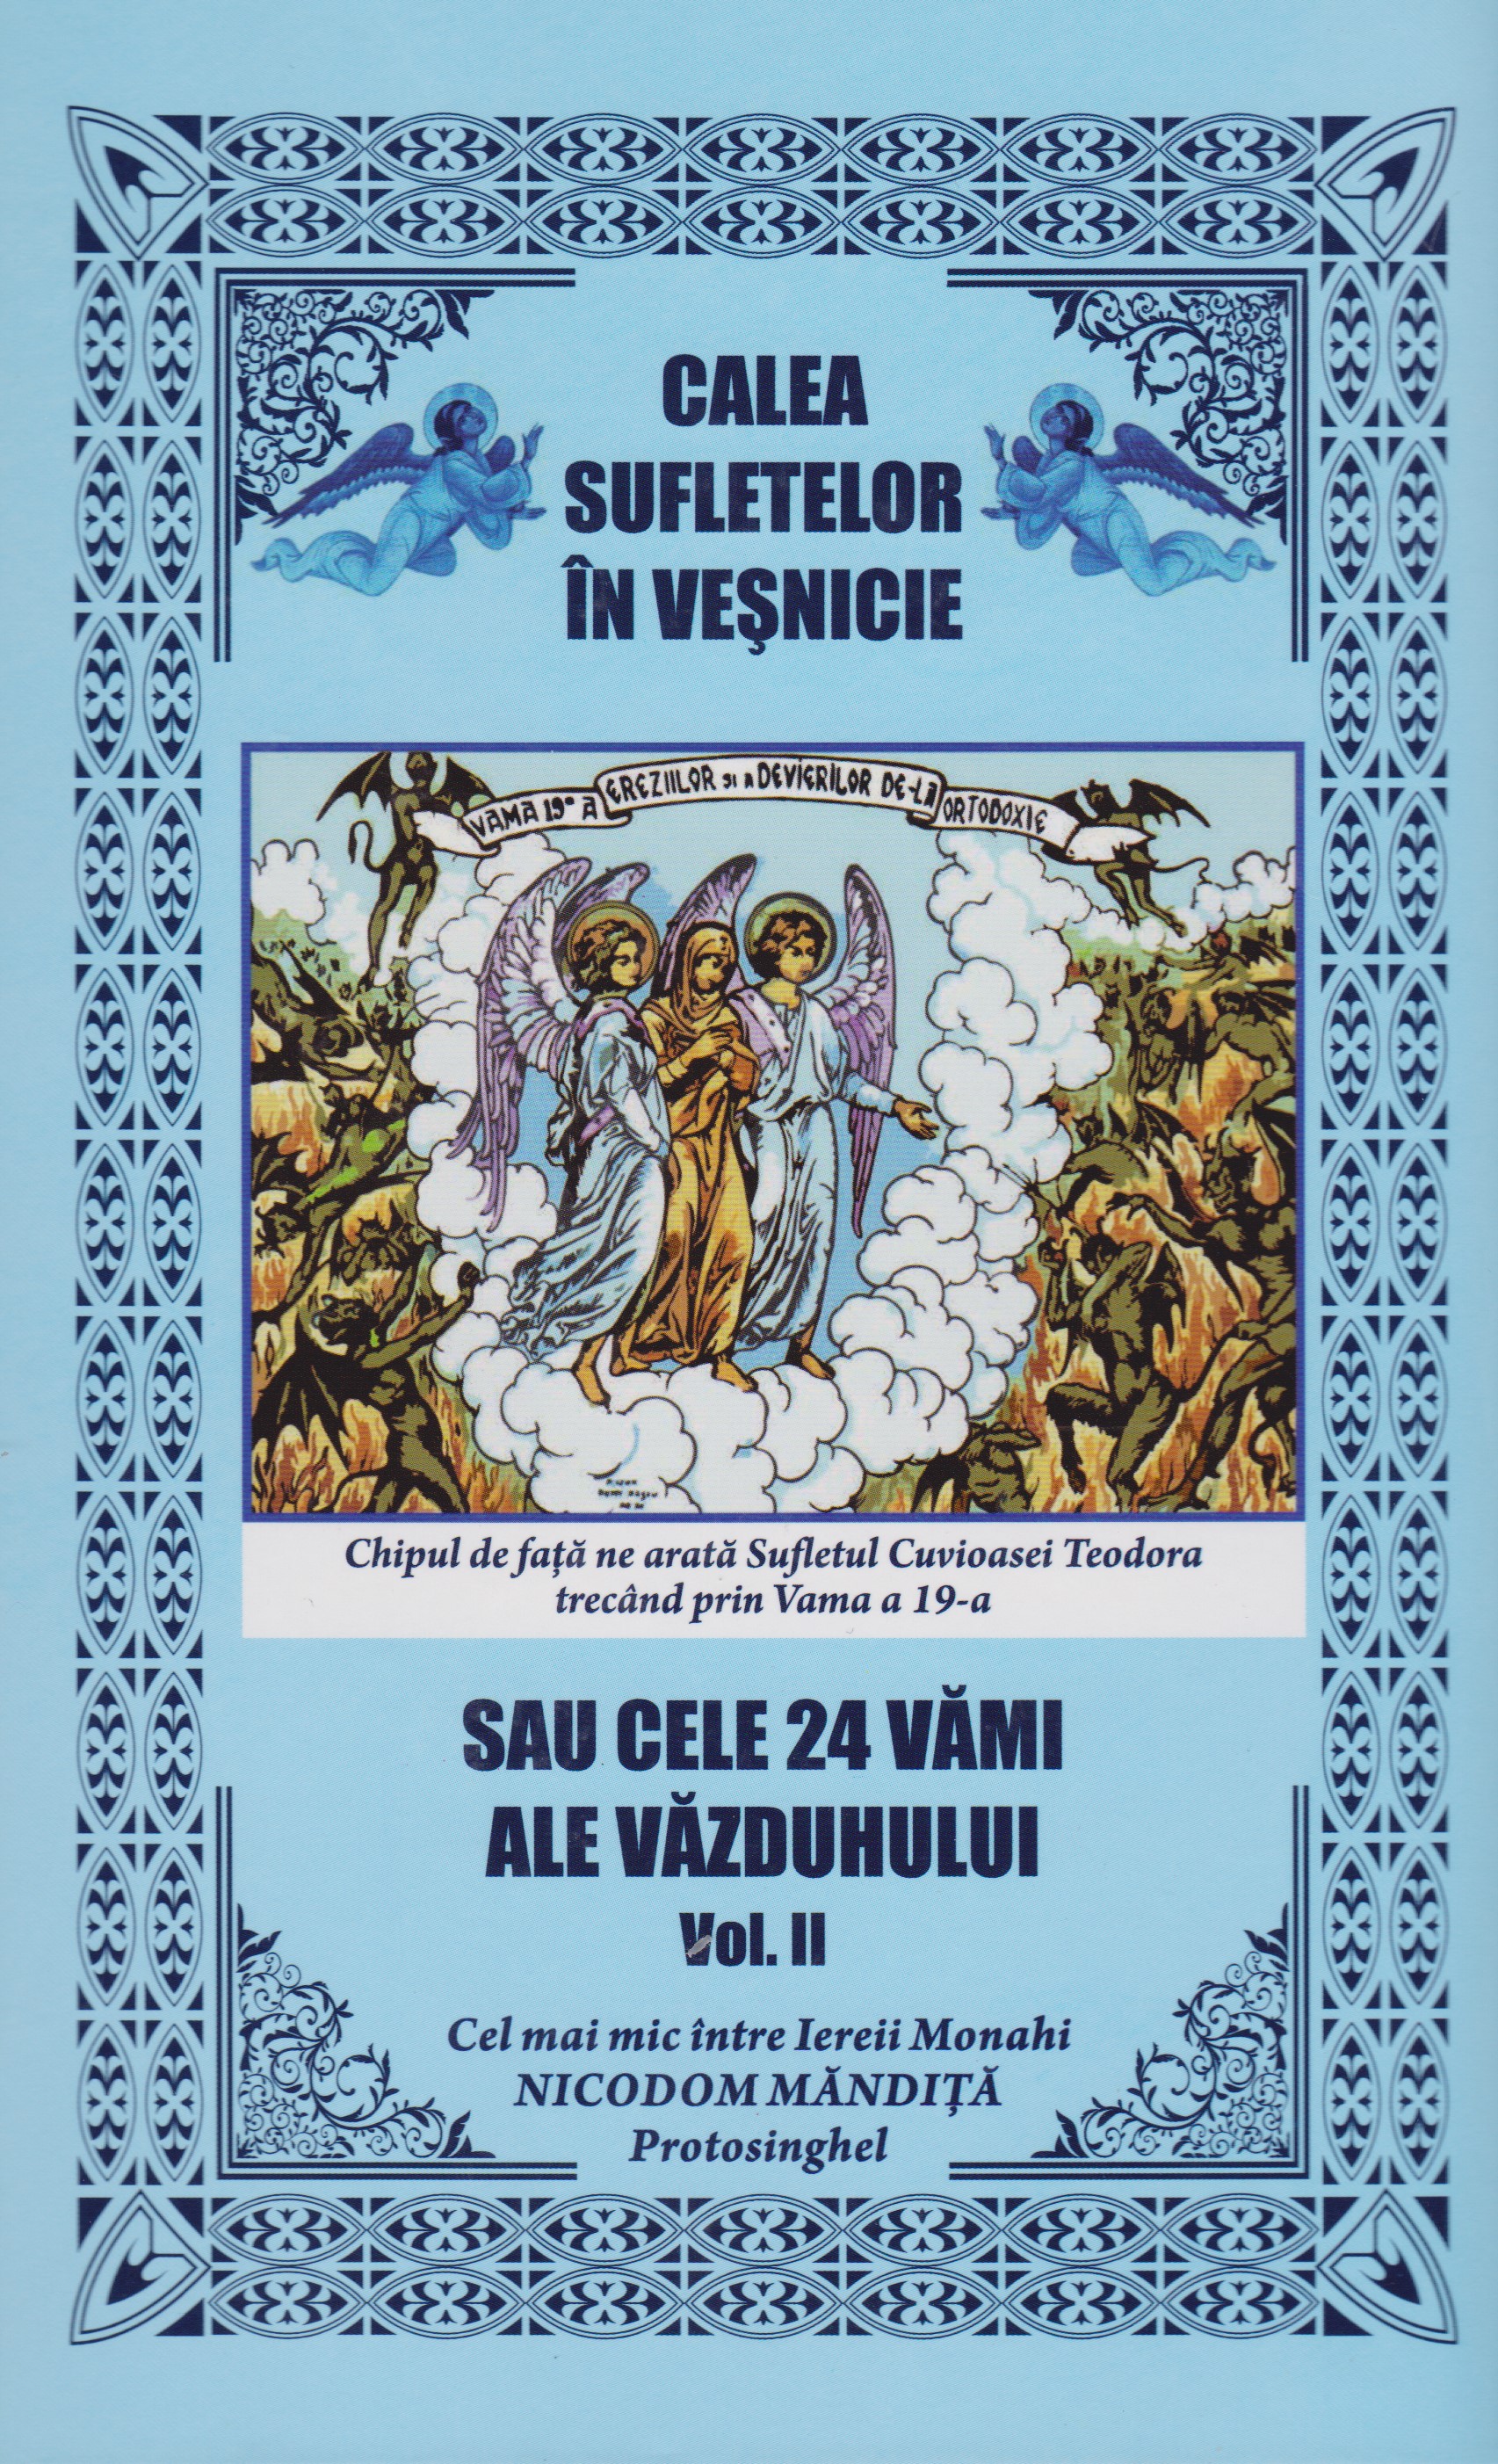 Calea sufletelor in vesnicie Vol. 2 - Protos. Nicodim Mandita